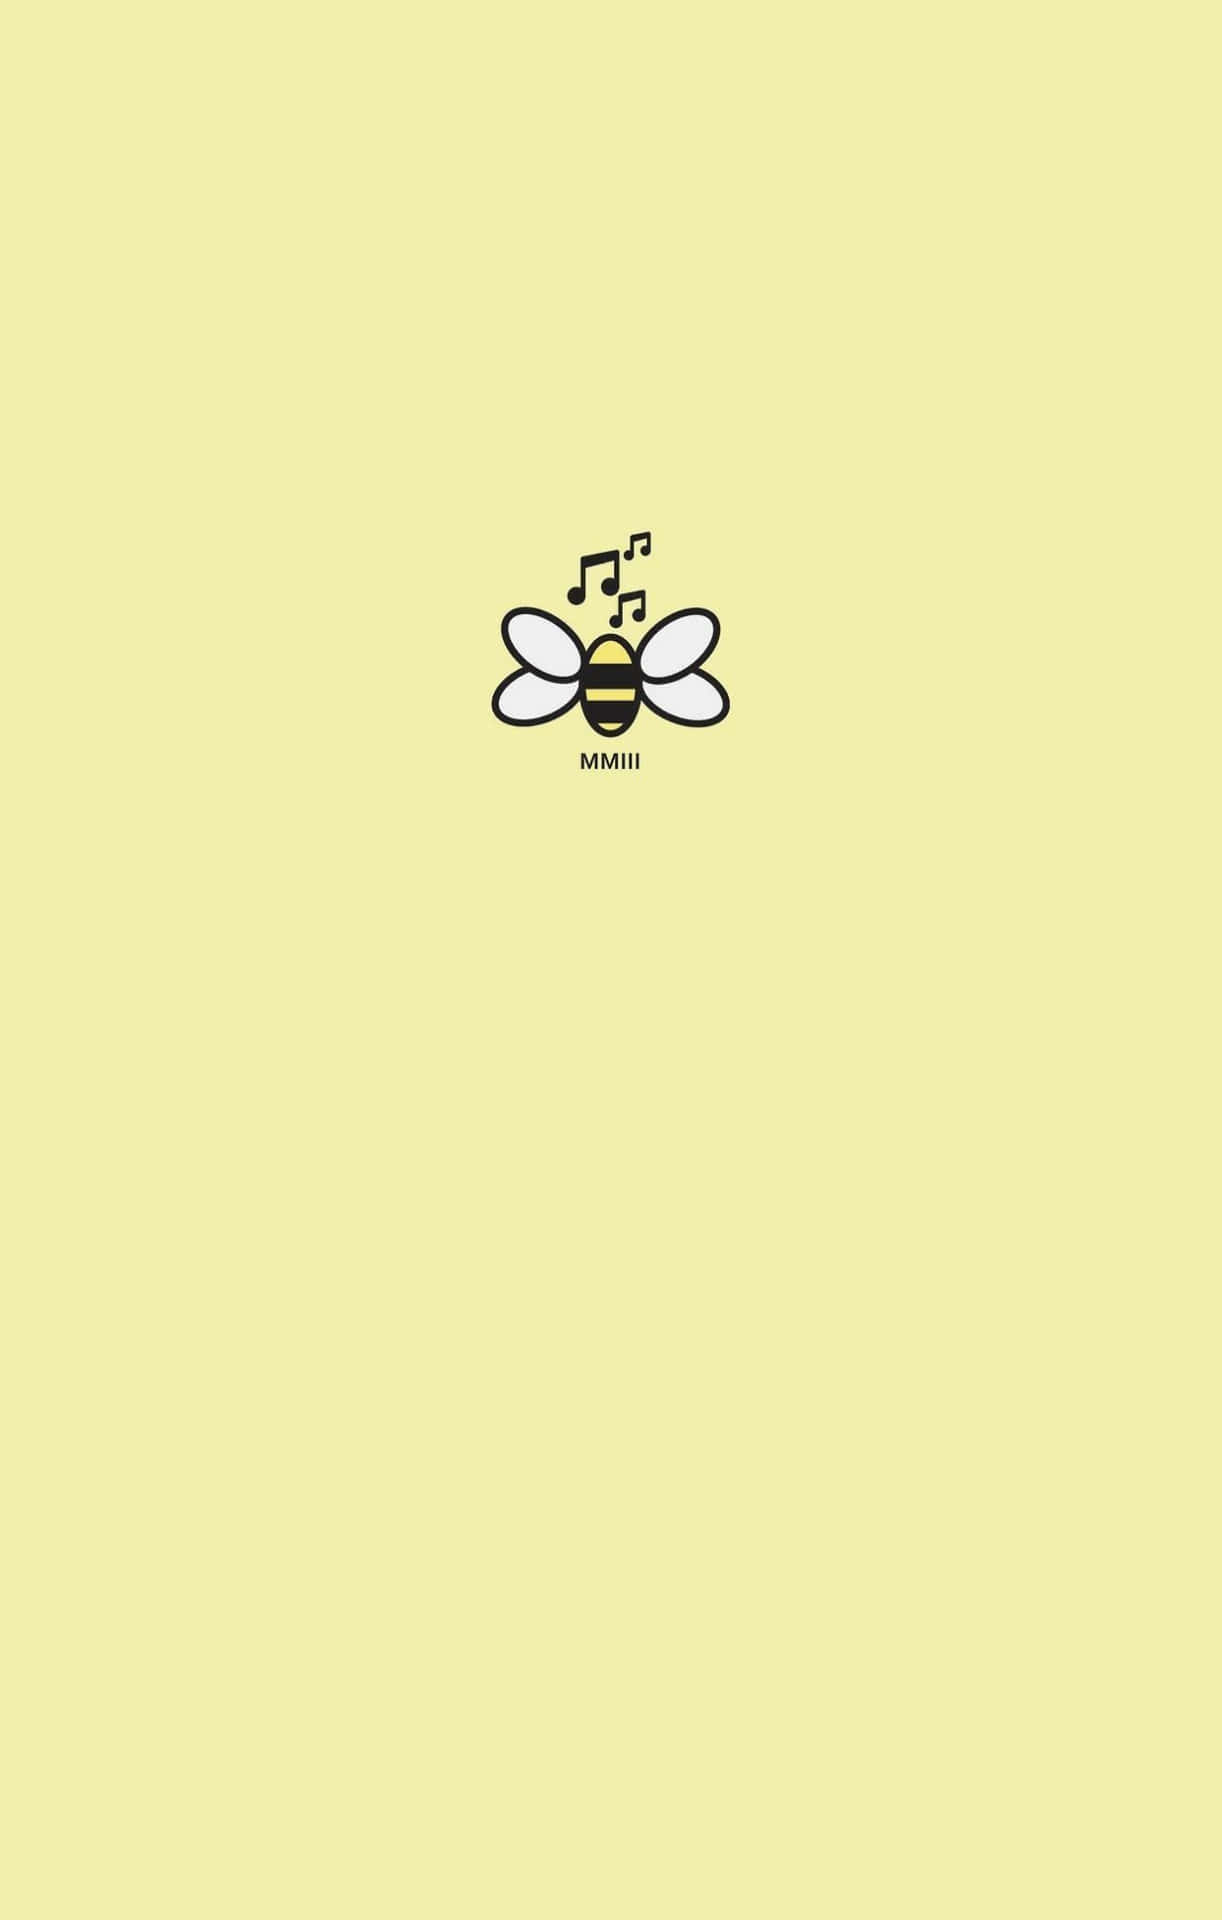 Aesthetic Bee on a Flower Wallpaper